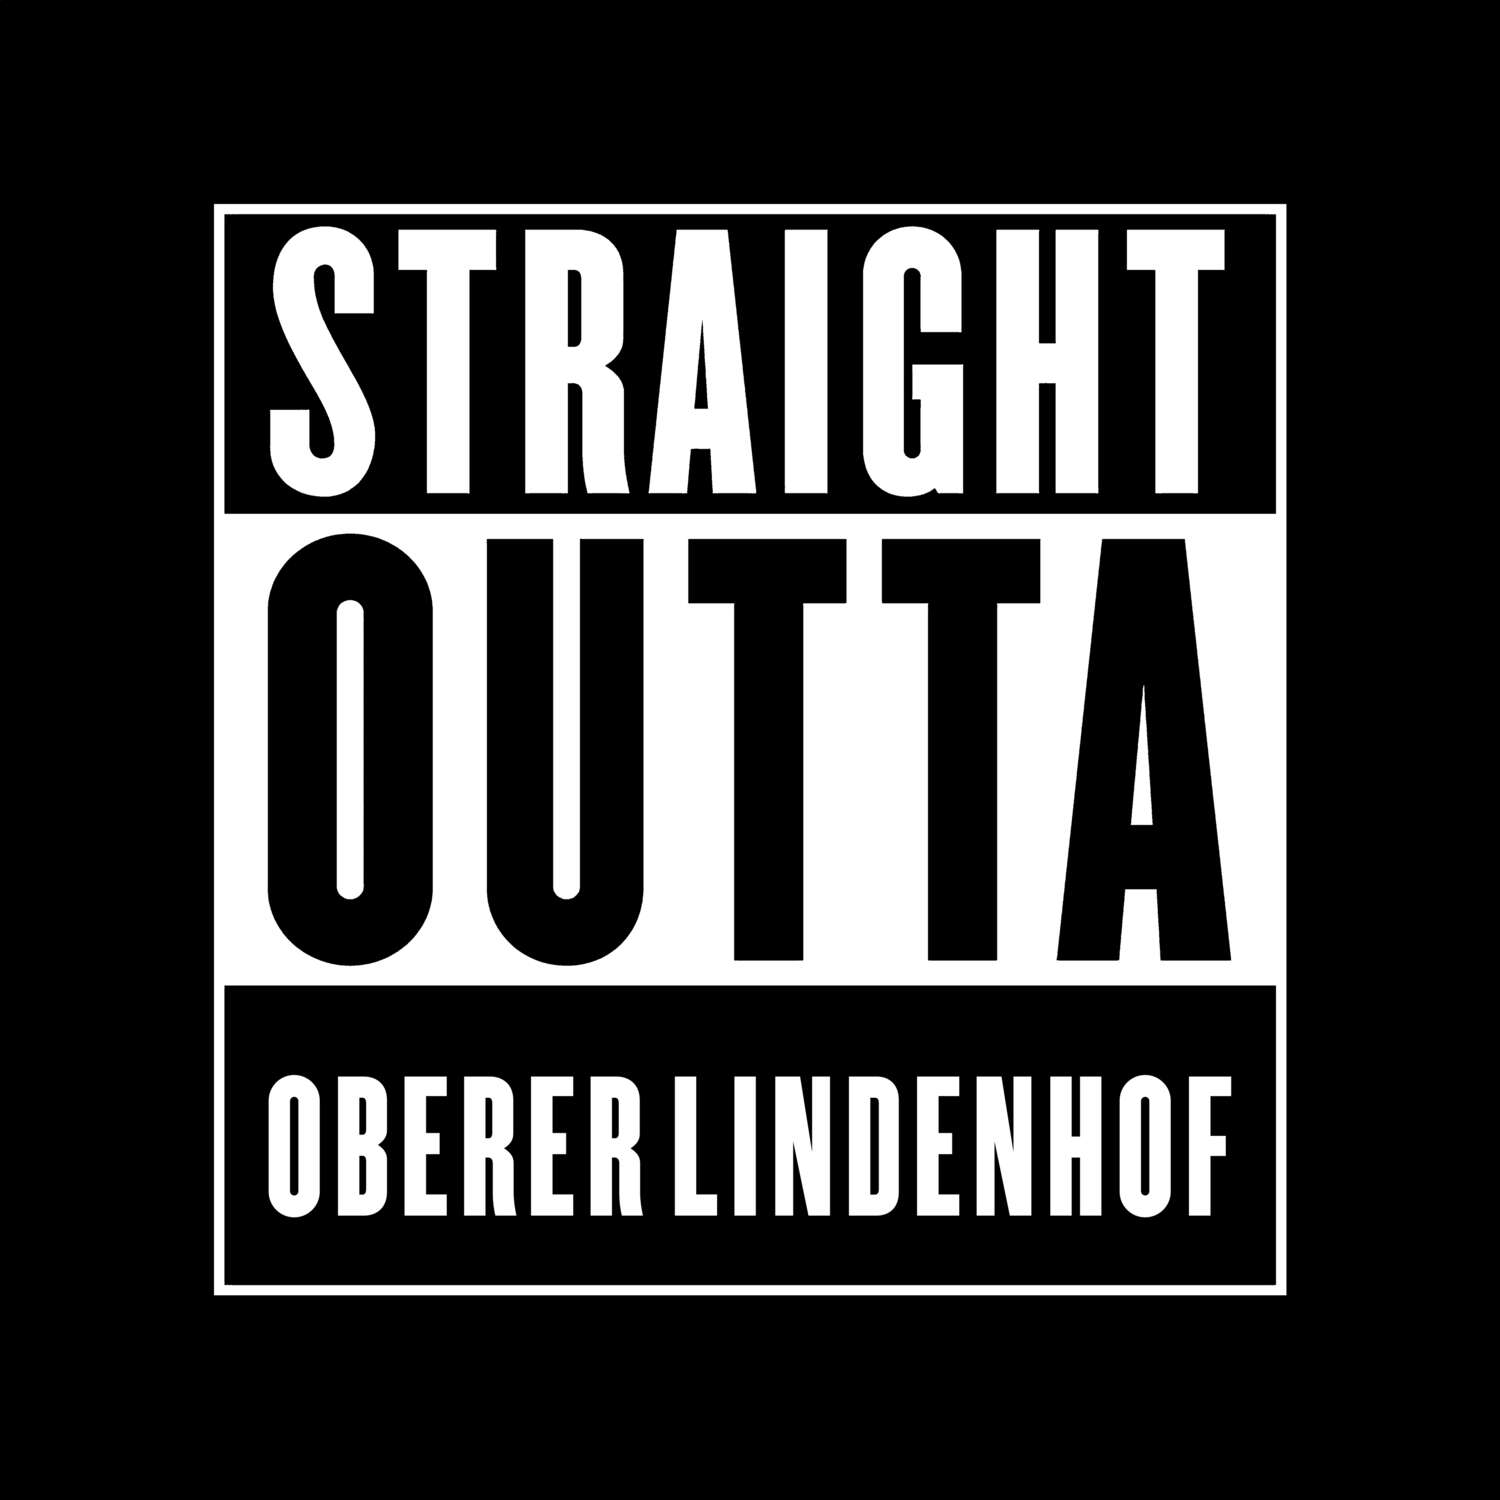 Oberer Lindenhof T-Shirt »Straight Outta«